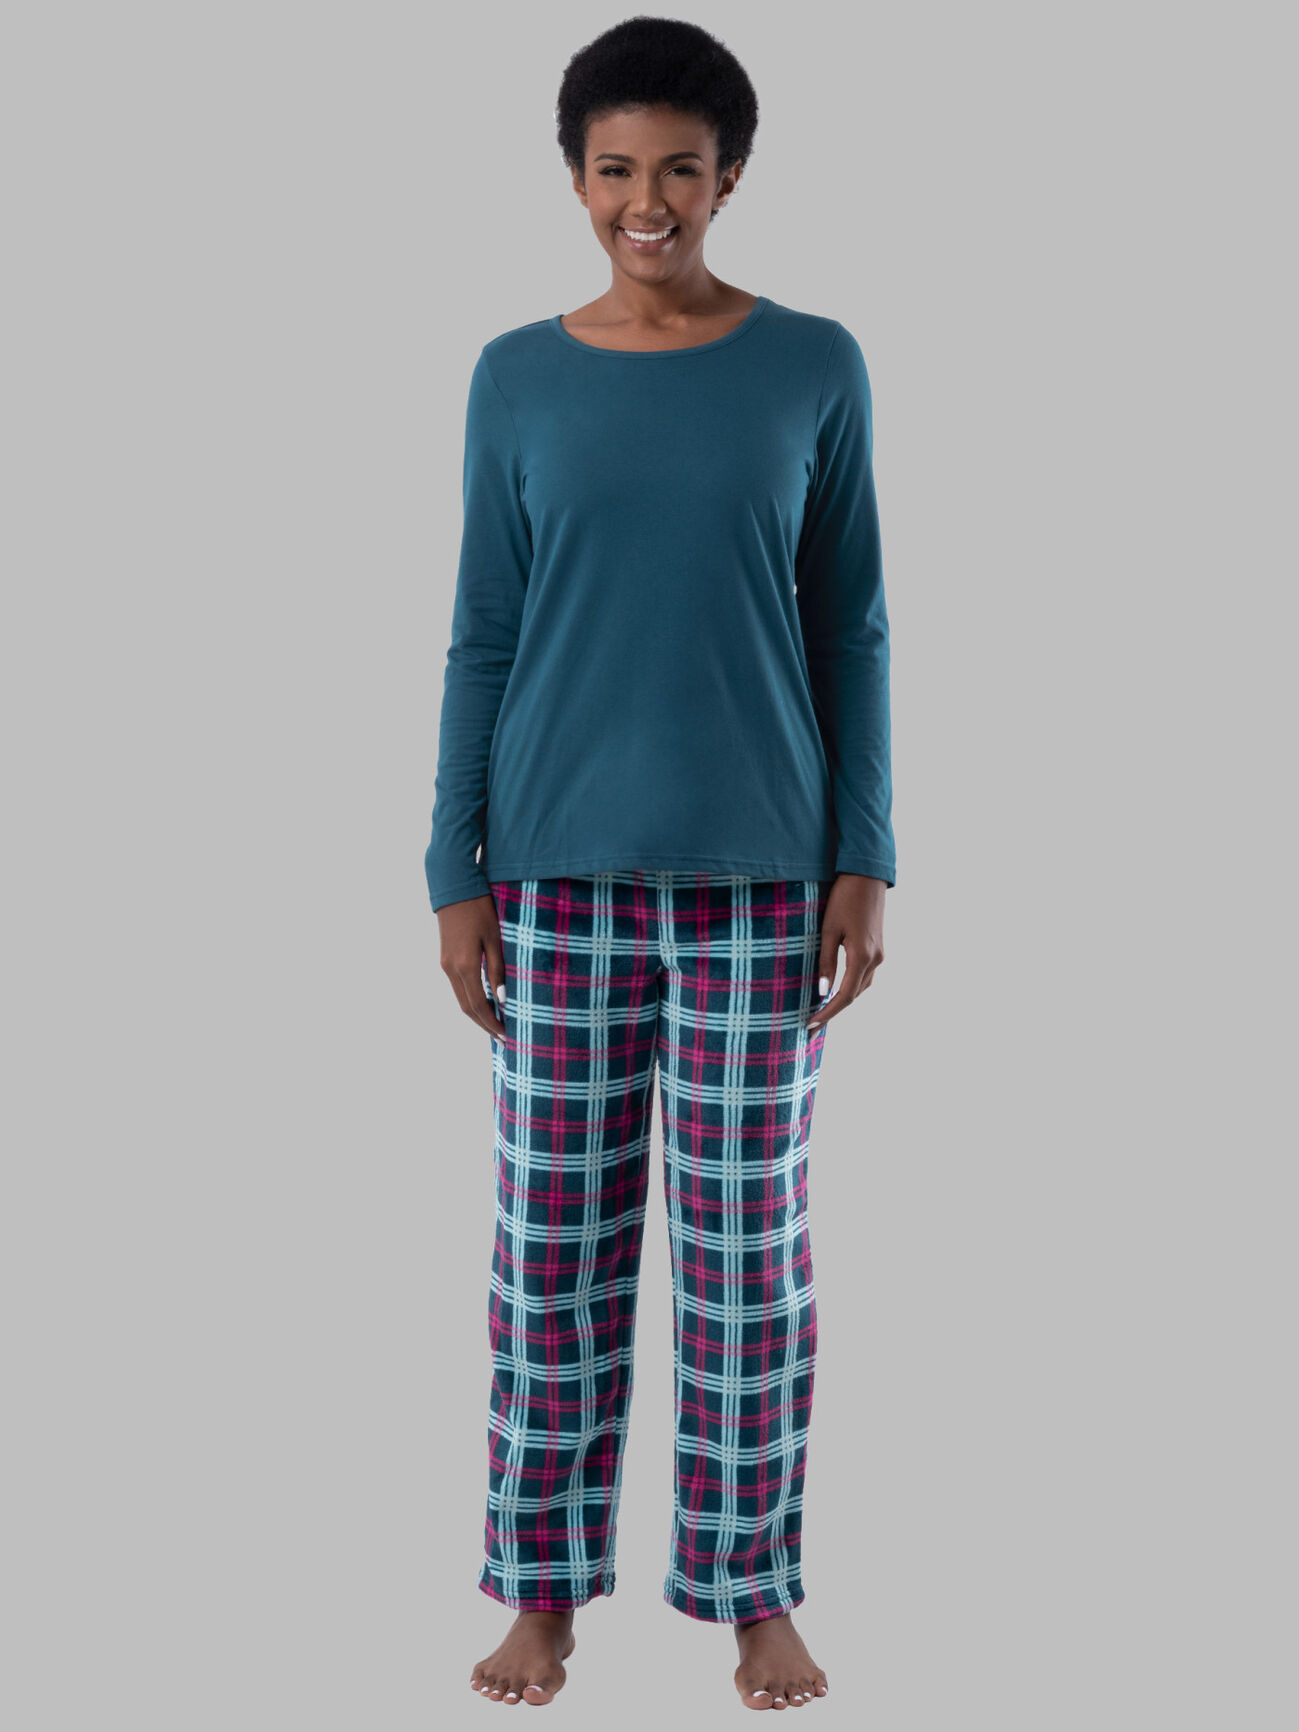 Women's Fleece  Top and Bottom,  2 Piece Pajama Set MIDNIGHT BLUE/TARTAN PLAID